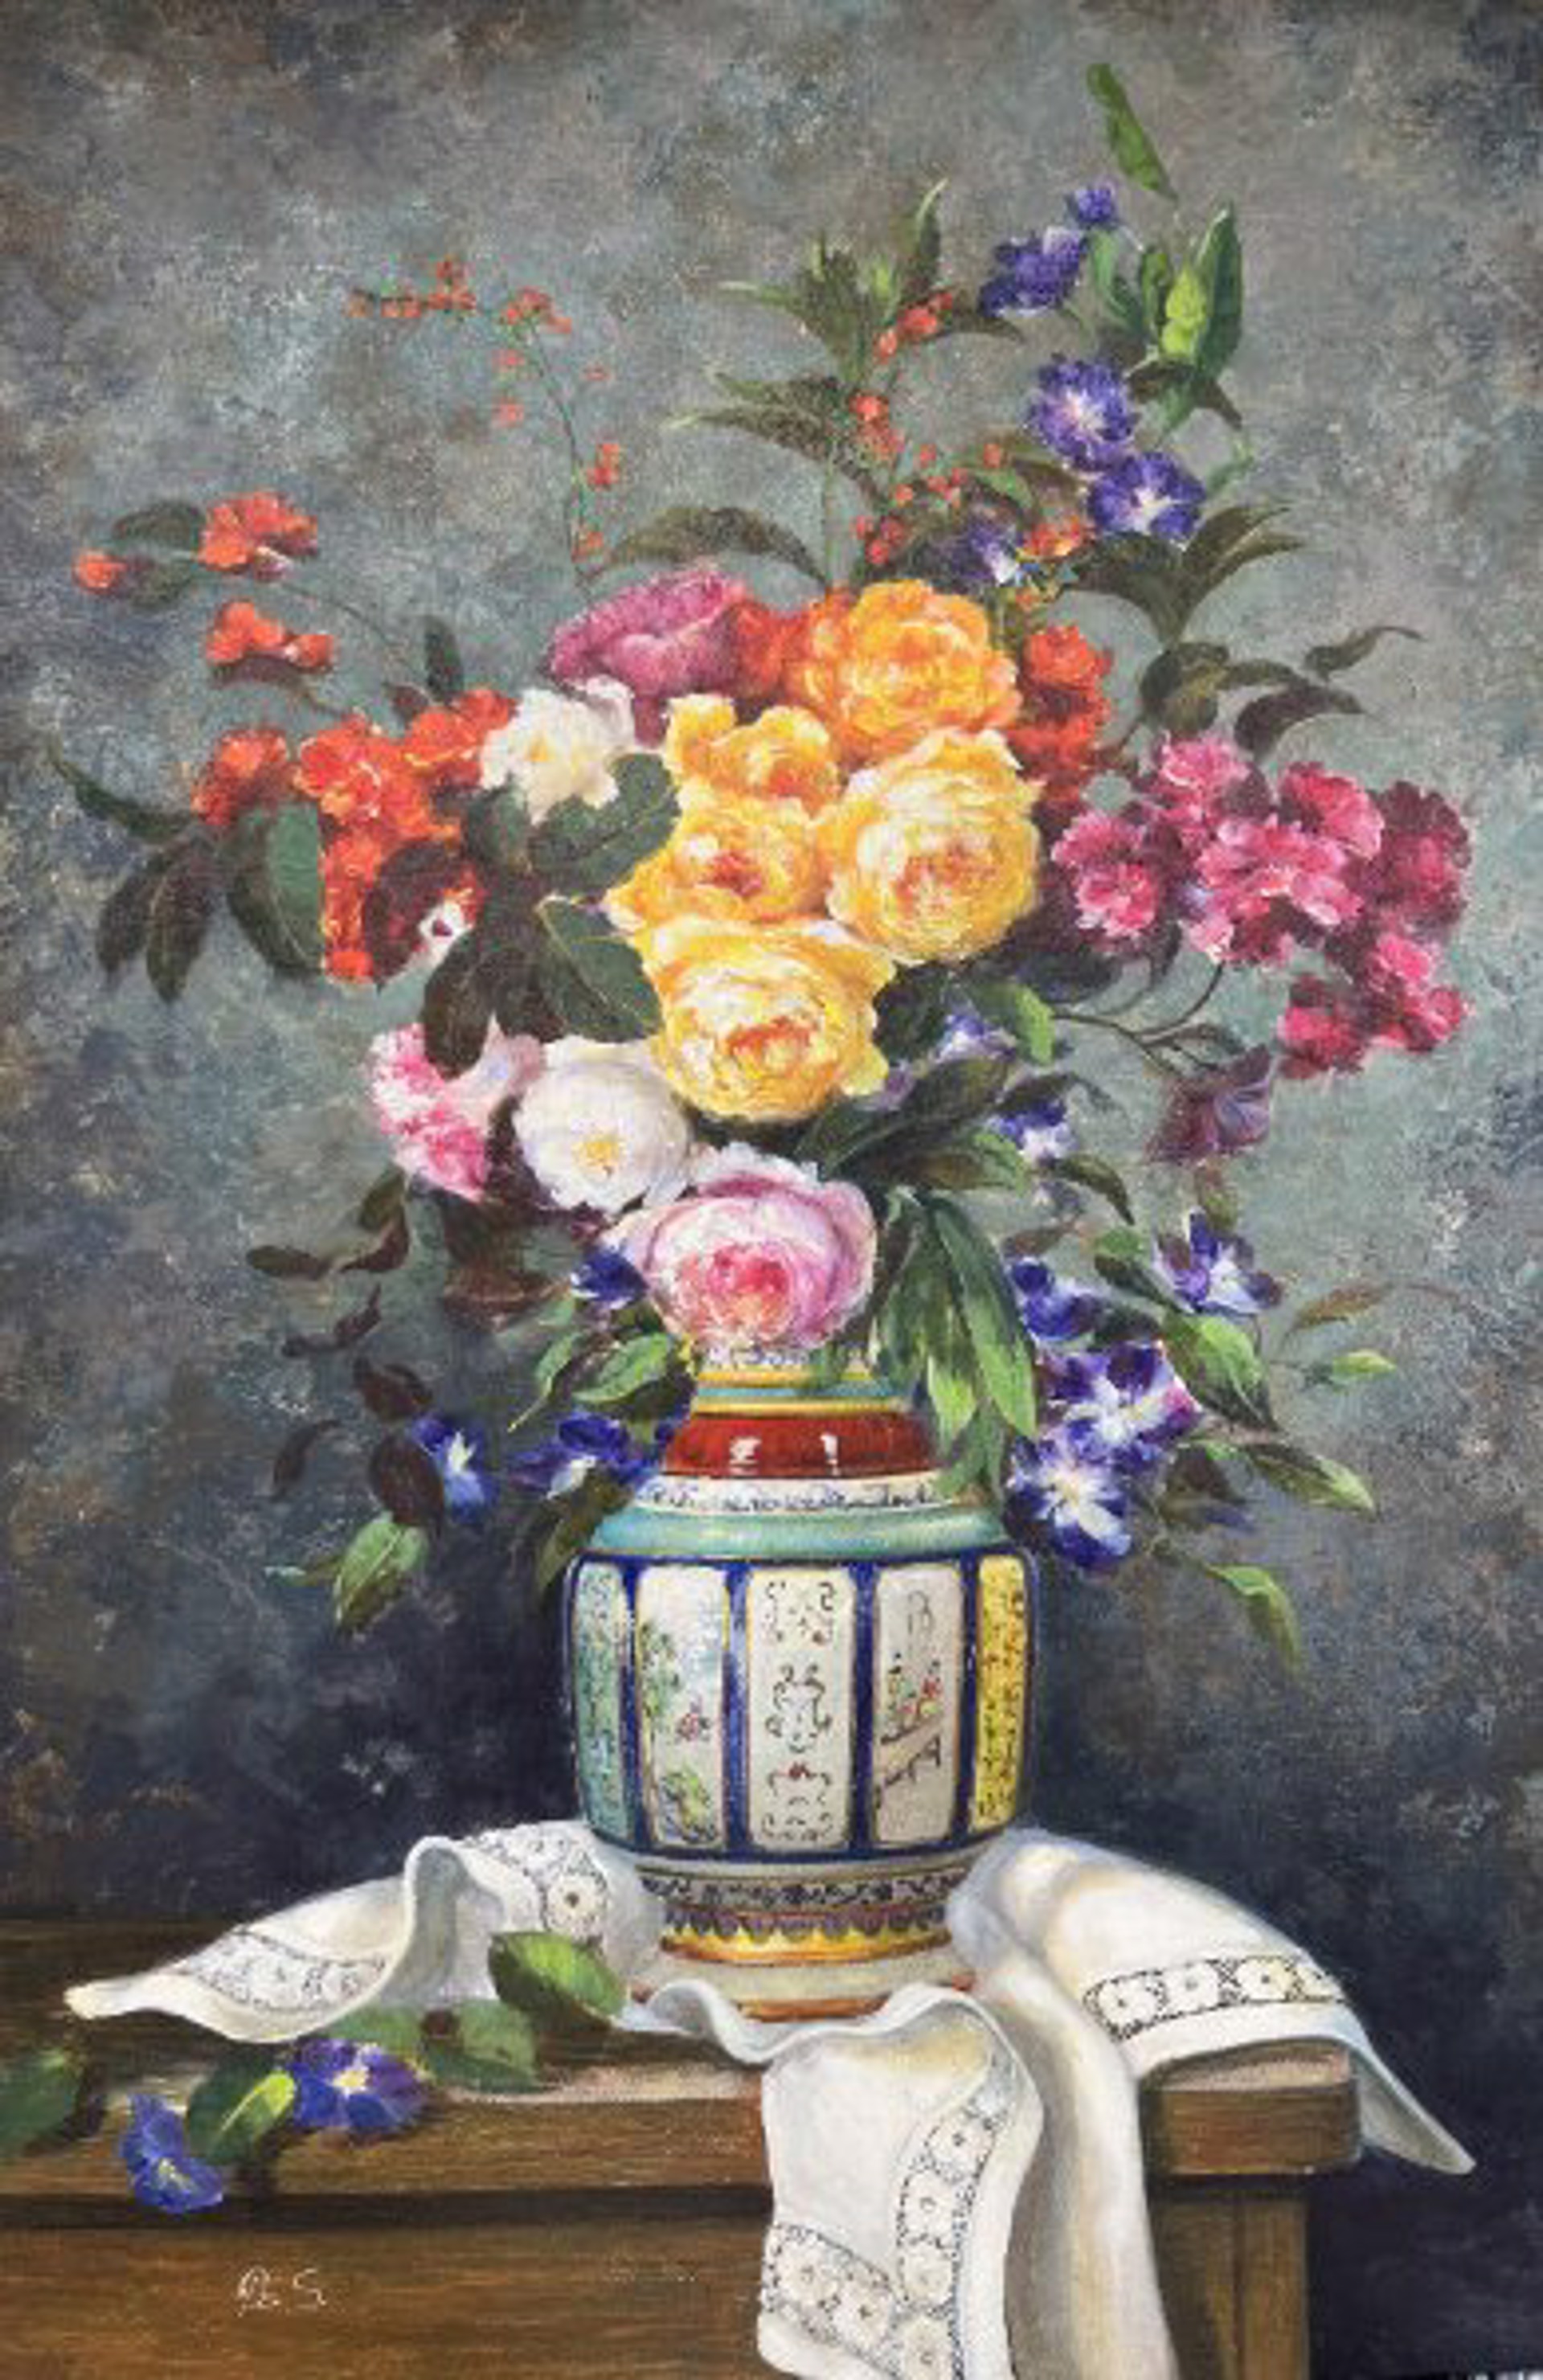 Flowers in a Vase by Elizabeth Pena